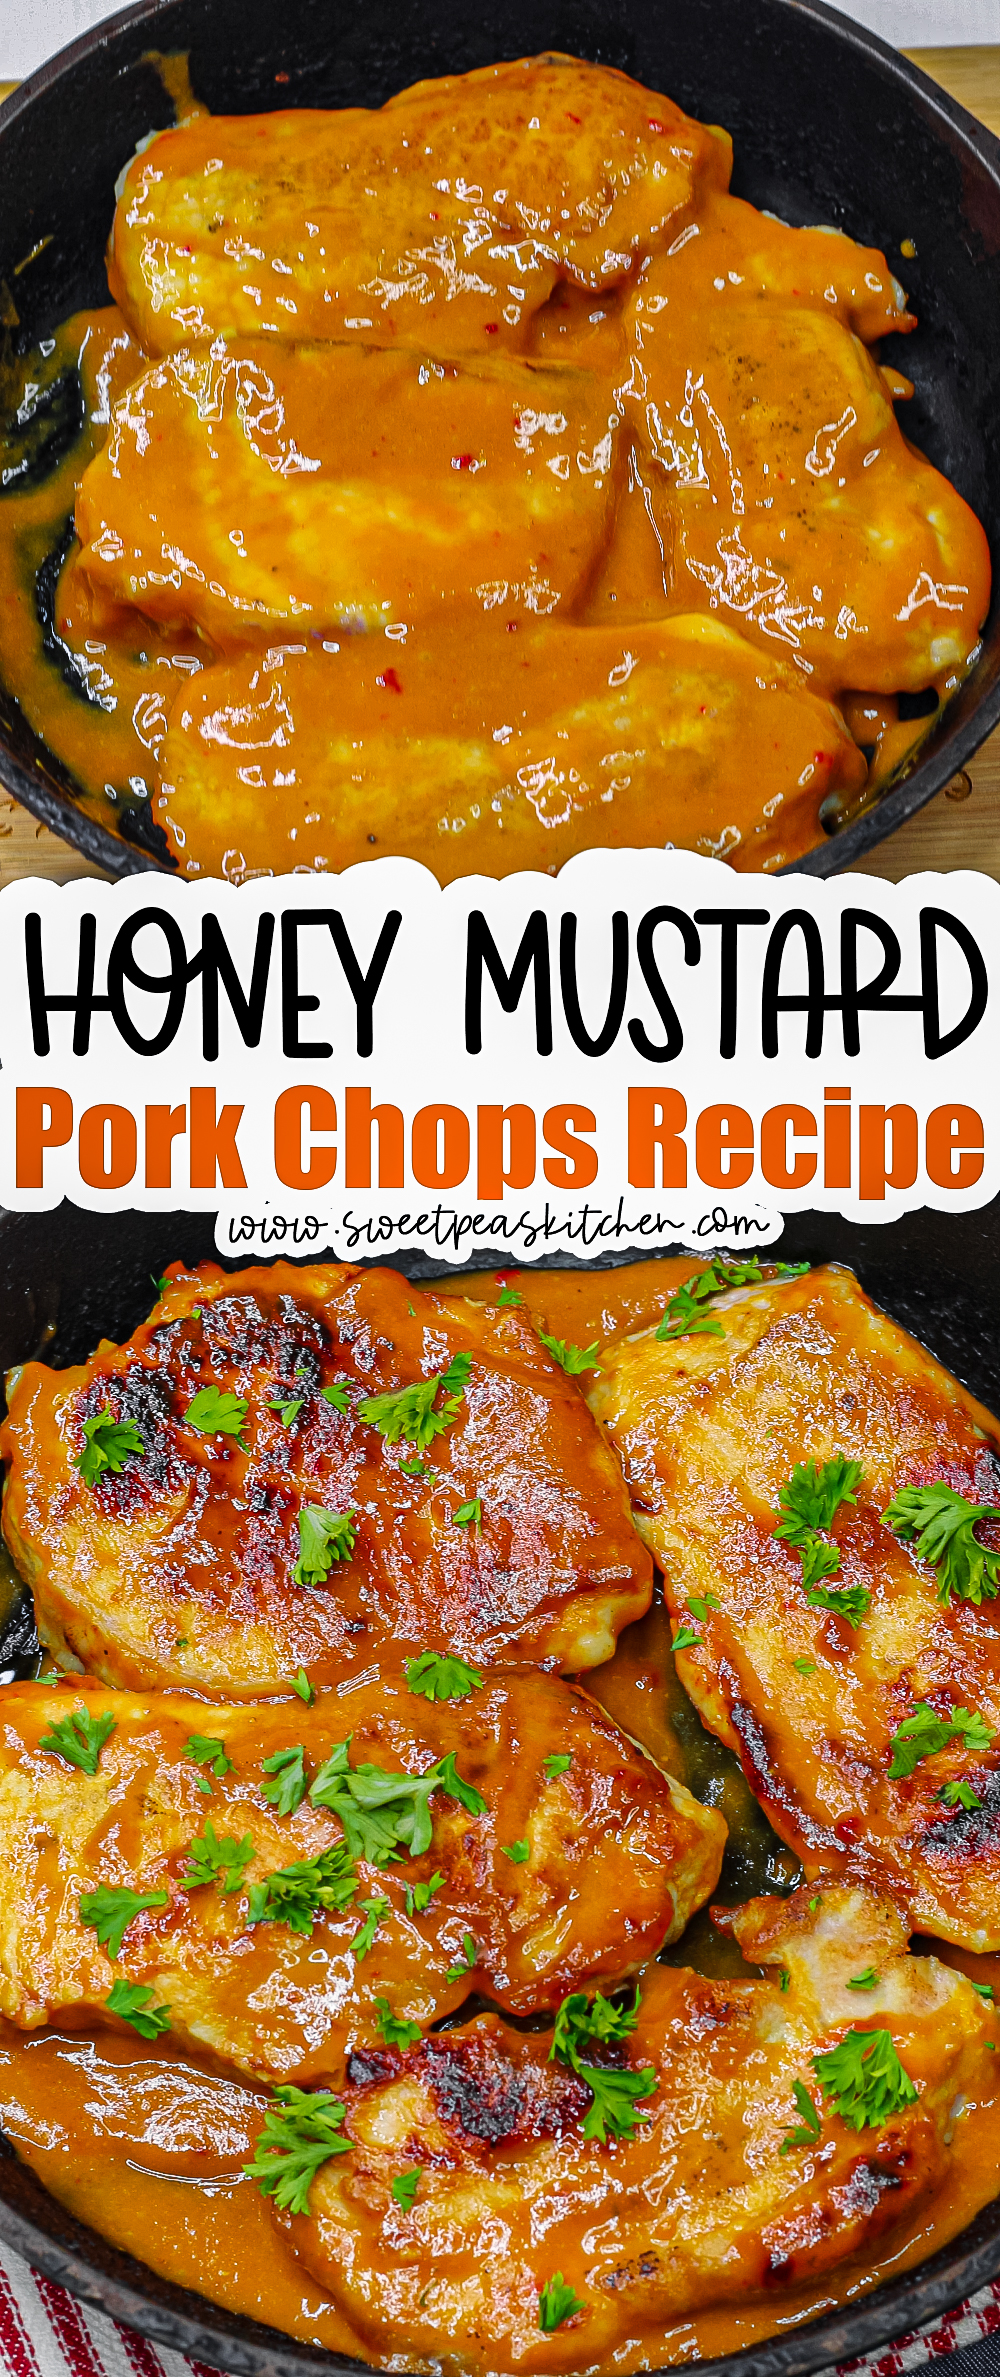 Honey Mustard Pork Chops on Pinterest